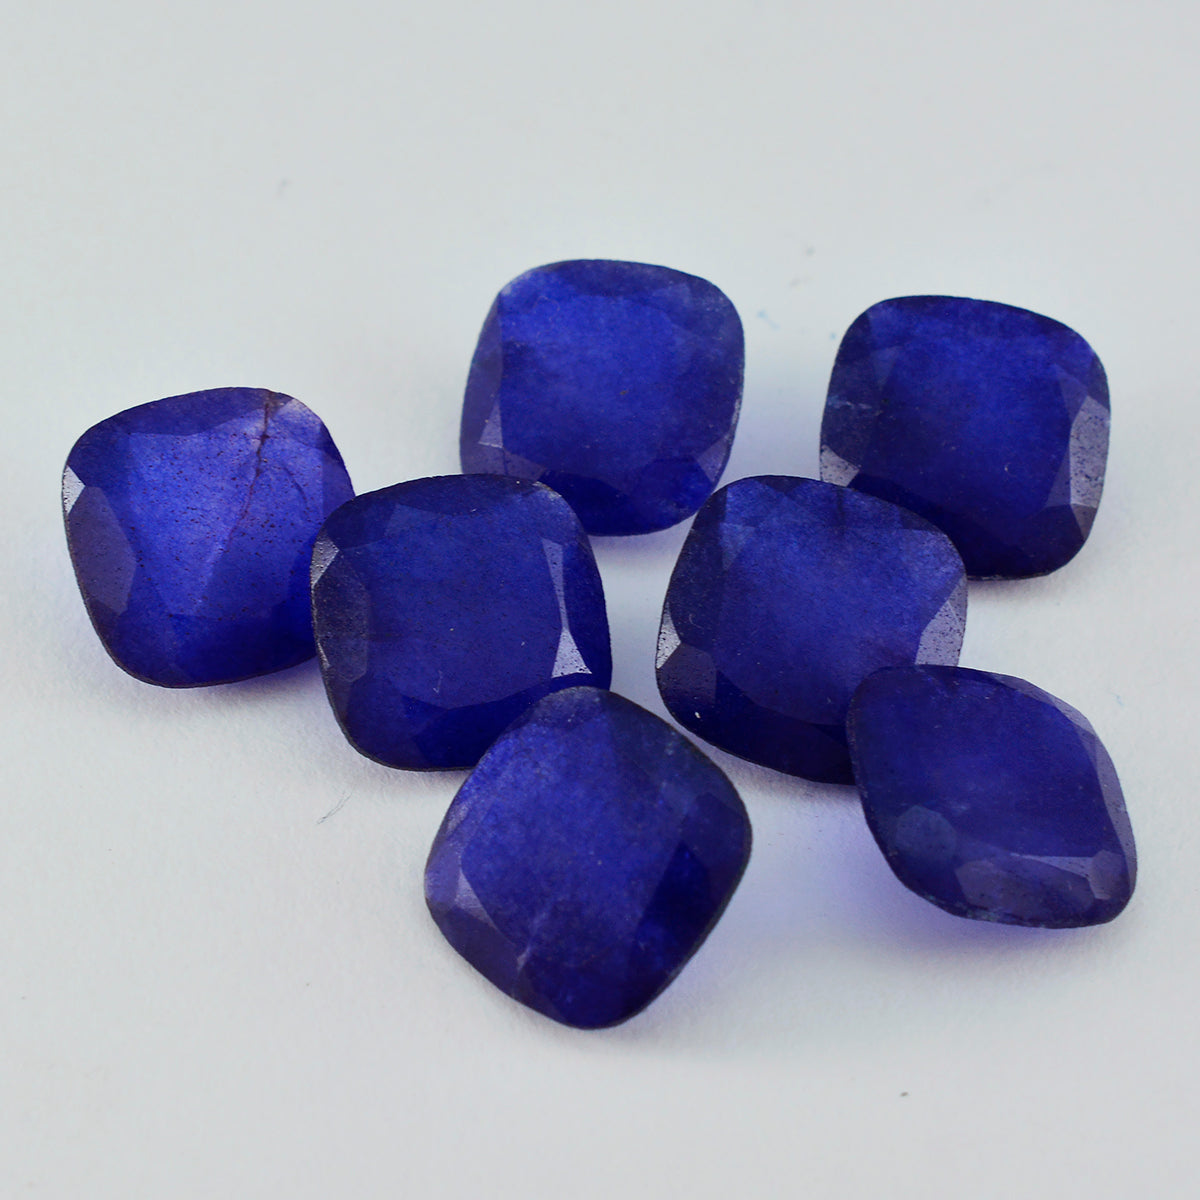 Riyogems 1PC Genuine Blue Jasper Faceted 9x9 mm Cushion Shape A+ Quality Loose Stone